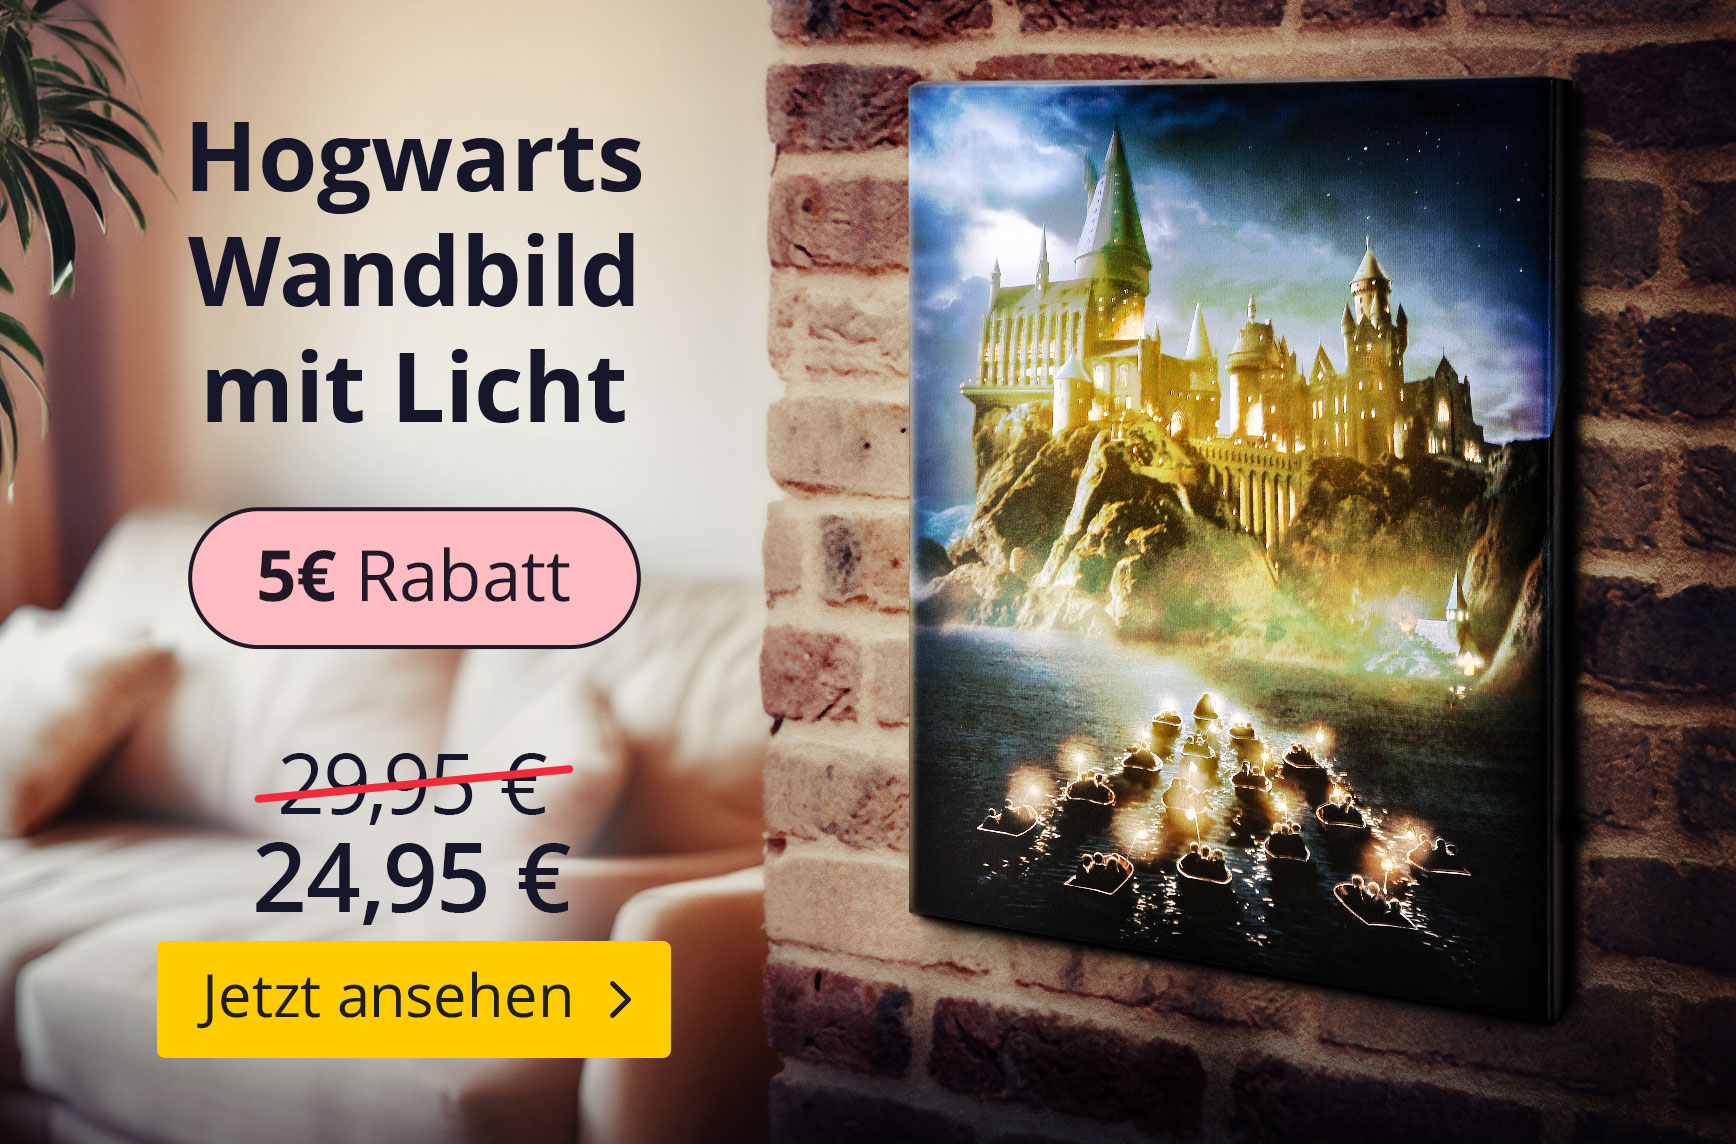 Harry Potter - Hogwarts Wandbild mit Licht - nur 24,95 € statt 29,95 € - 5 € Rabatt